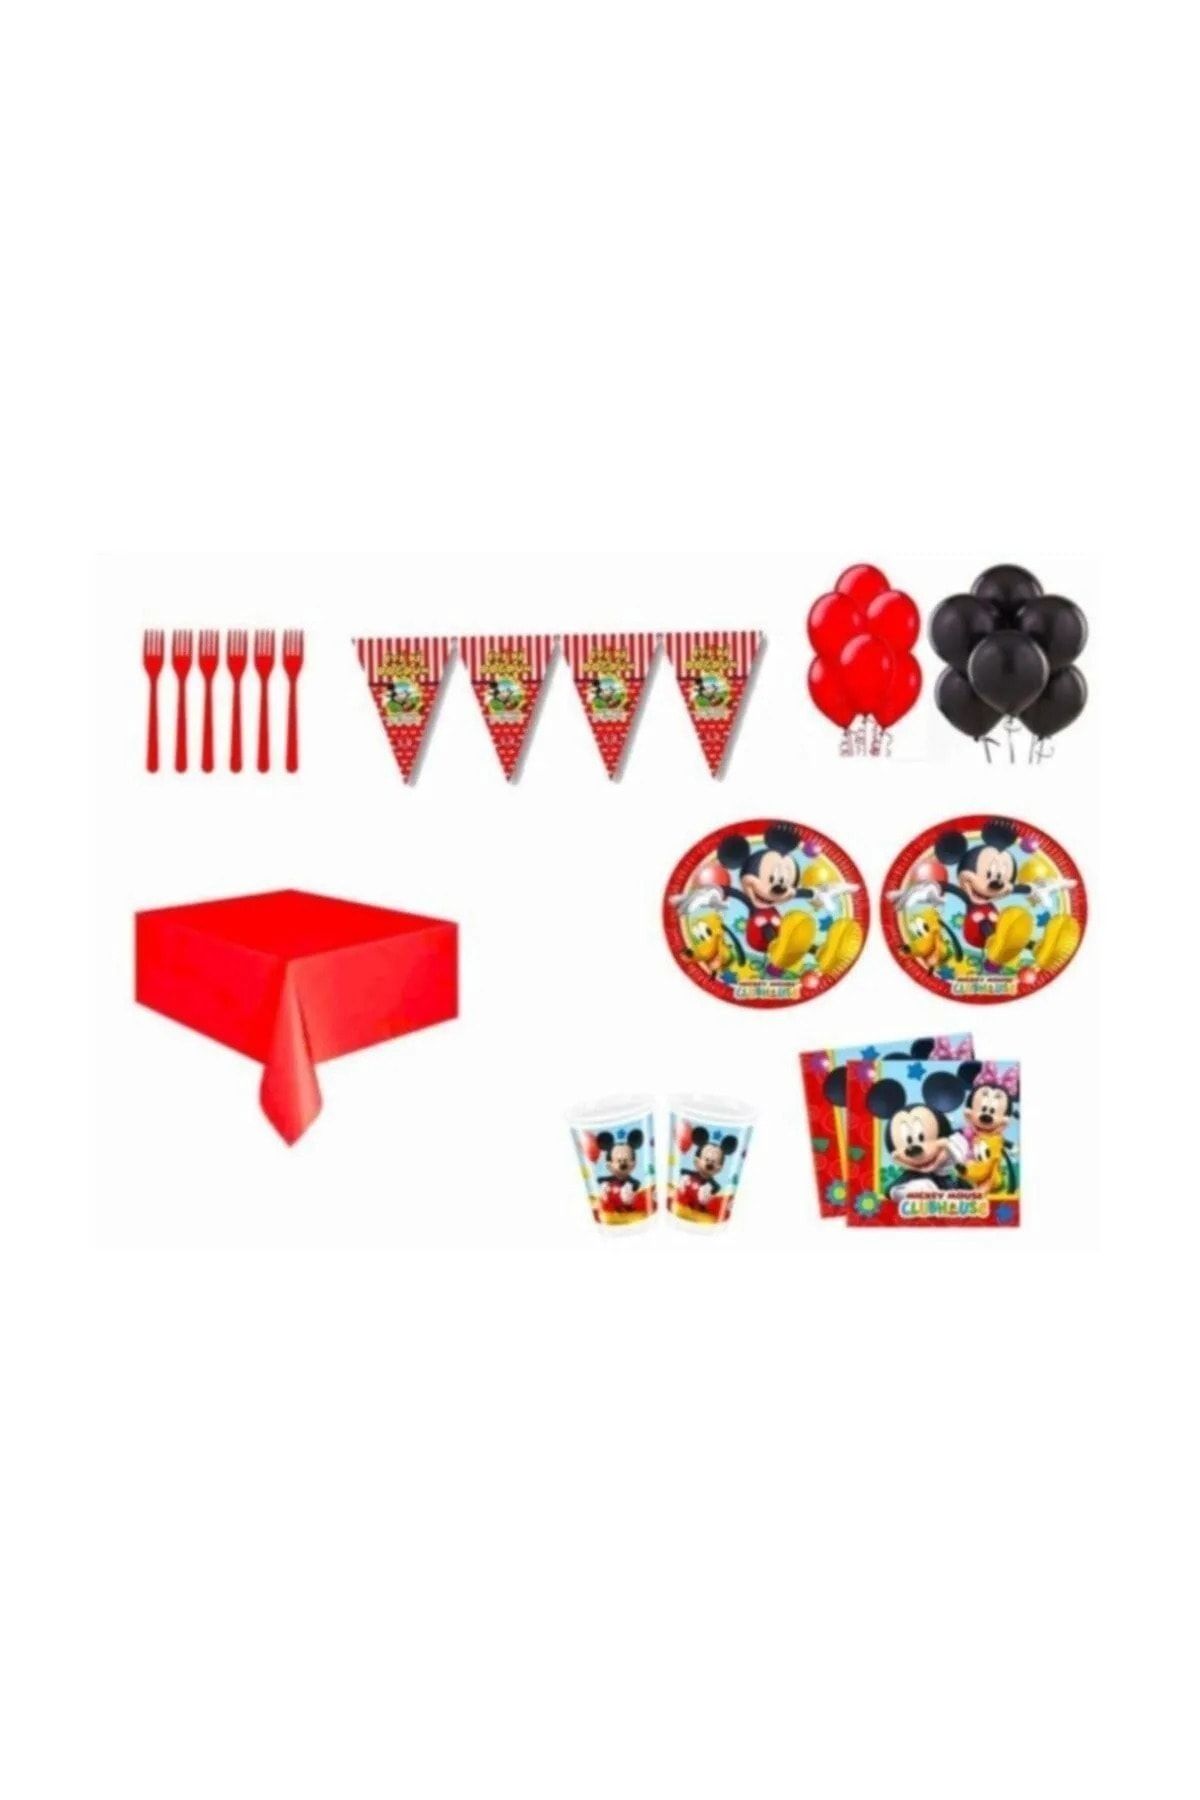 FOKUL Mickey Mouse 8 Kişilik Doğum Günü Parti Seti Mickey Mouse Parti Malzemeleri Konsepti